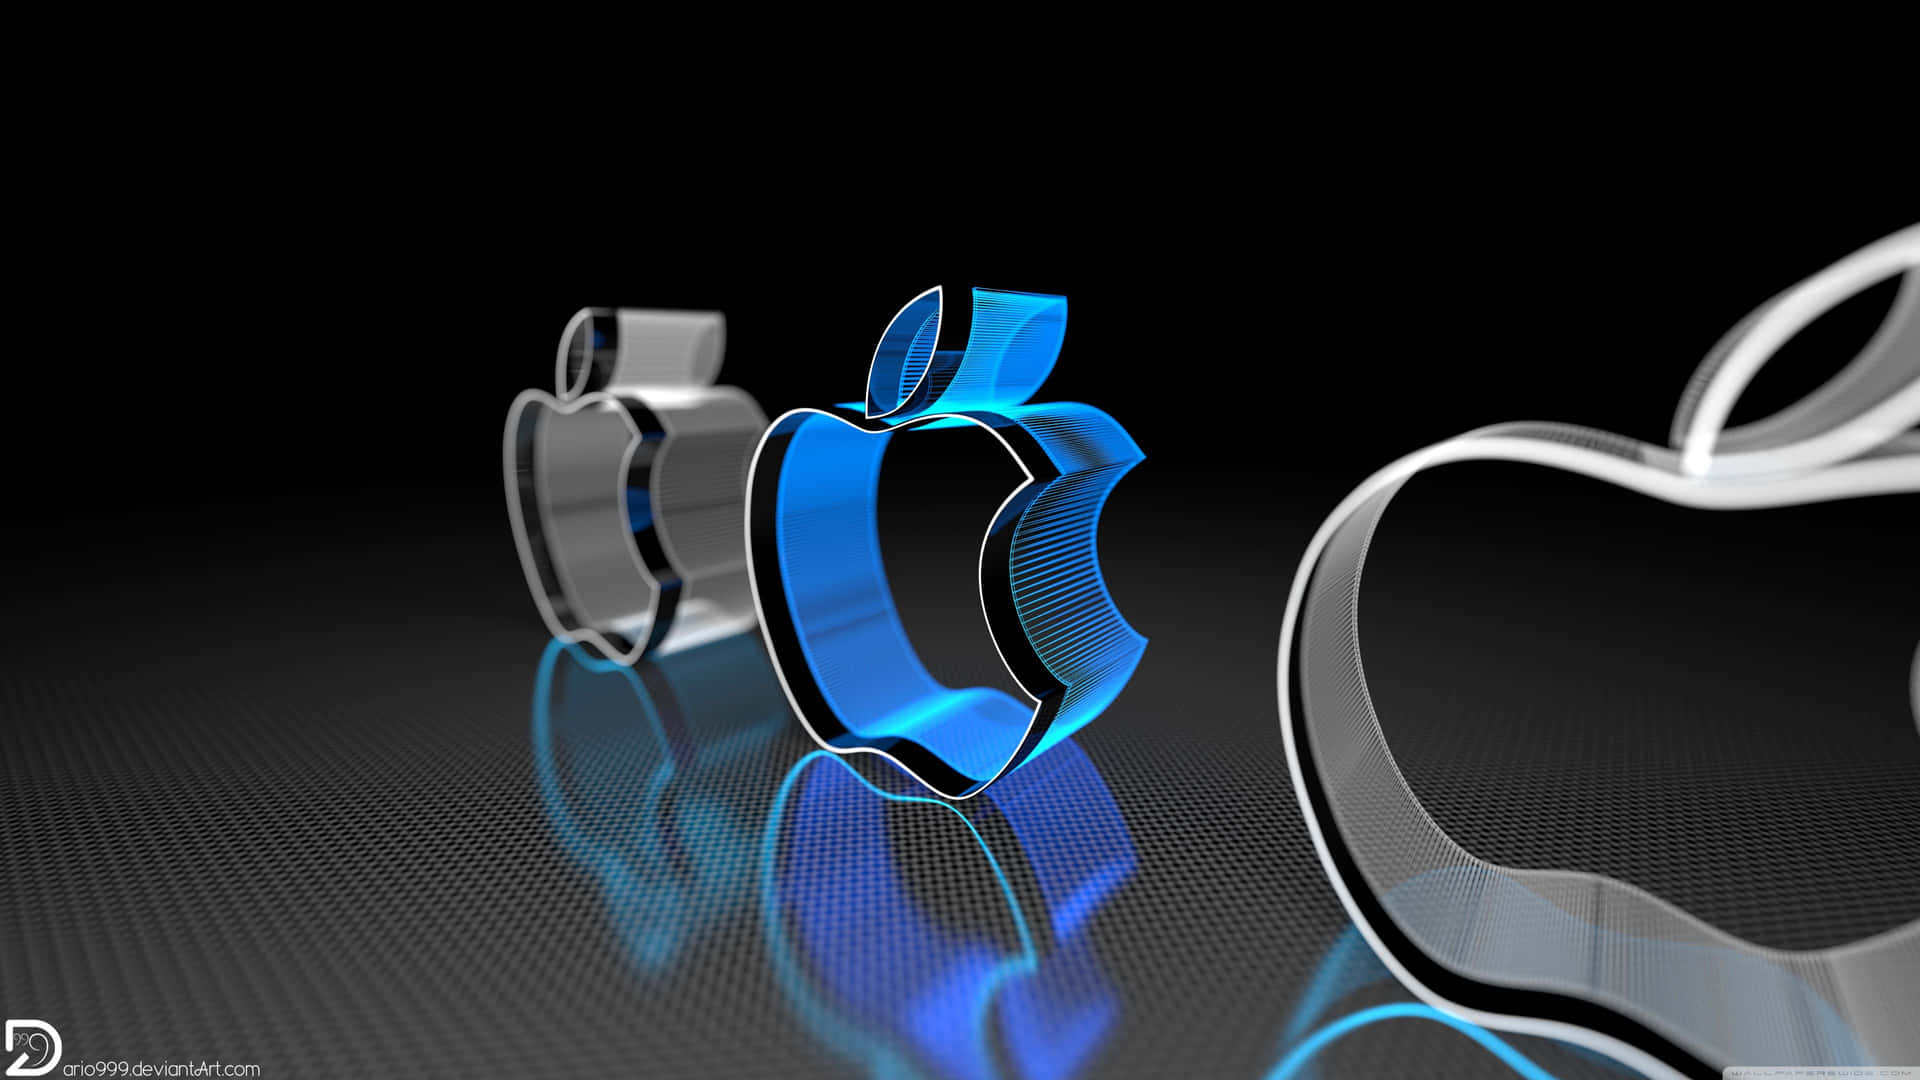 Apple Logos On A Black Background Background